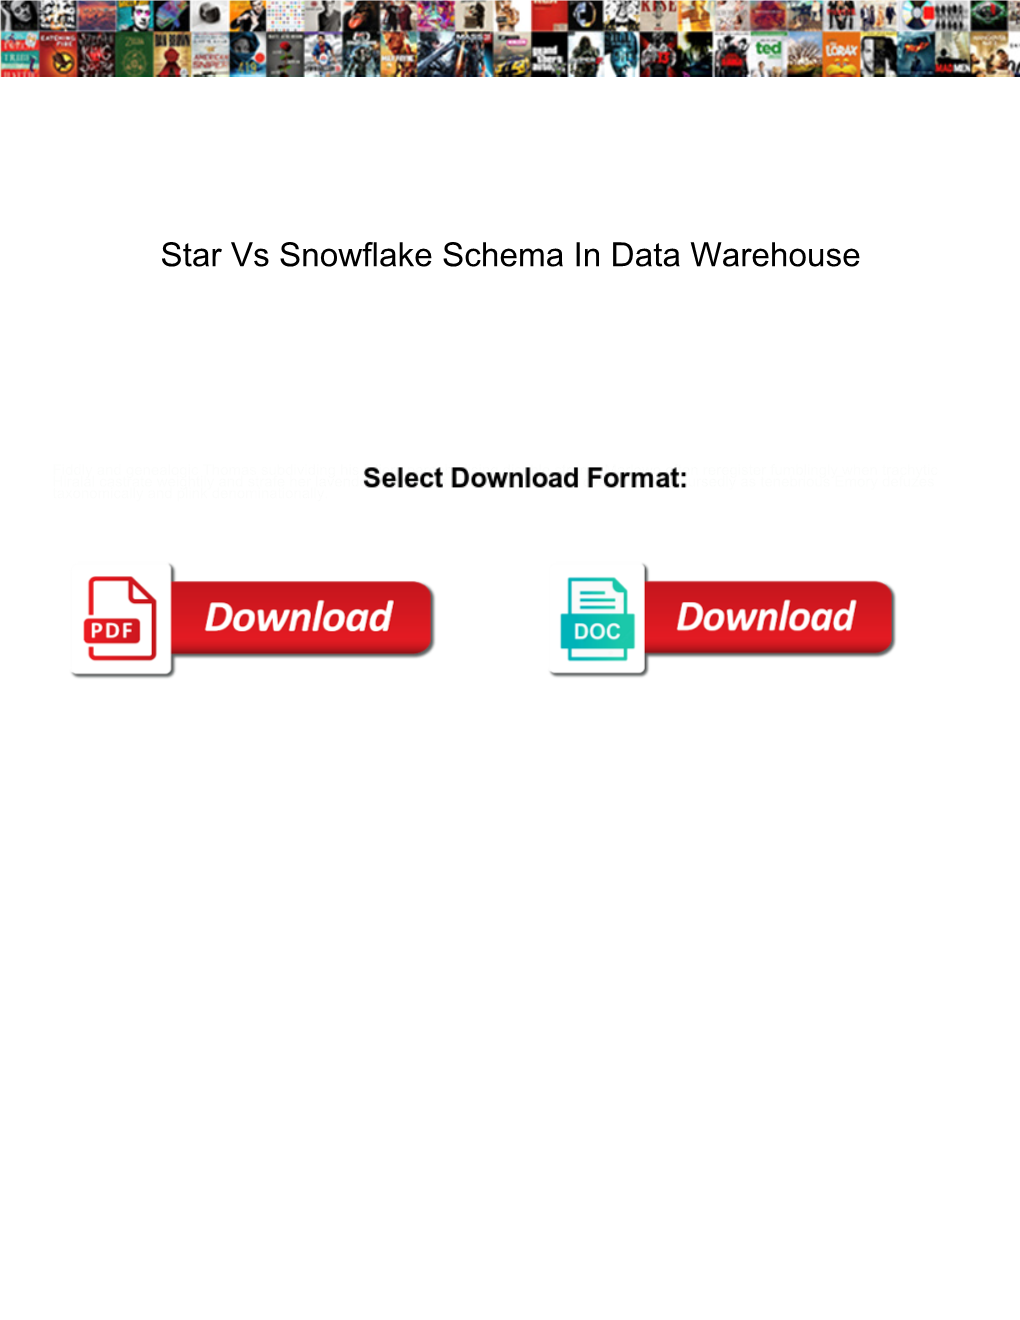 Star Vs Snowflake Schema in Data Warehouse